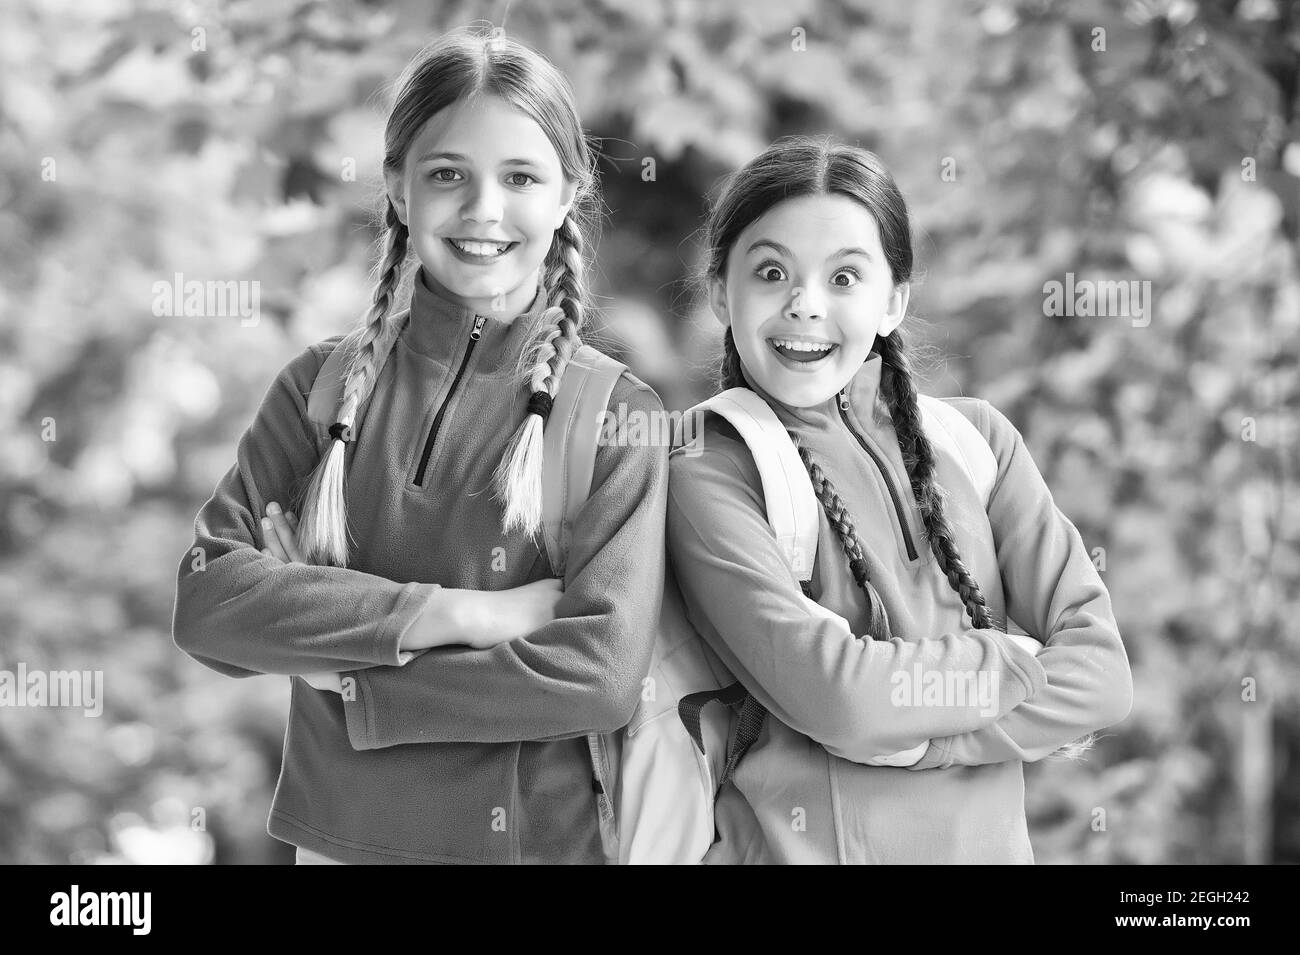 Mädchen Backpacker Freunde Fleece Kleidung Rucksäcke Wald Hintergrund, Bergsteigen Konzept. Stockfoto